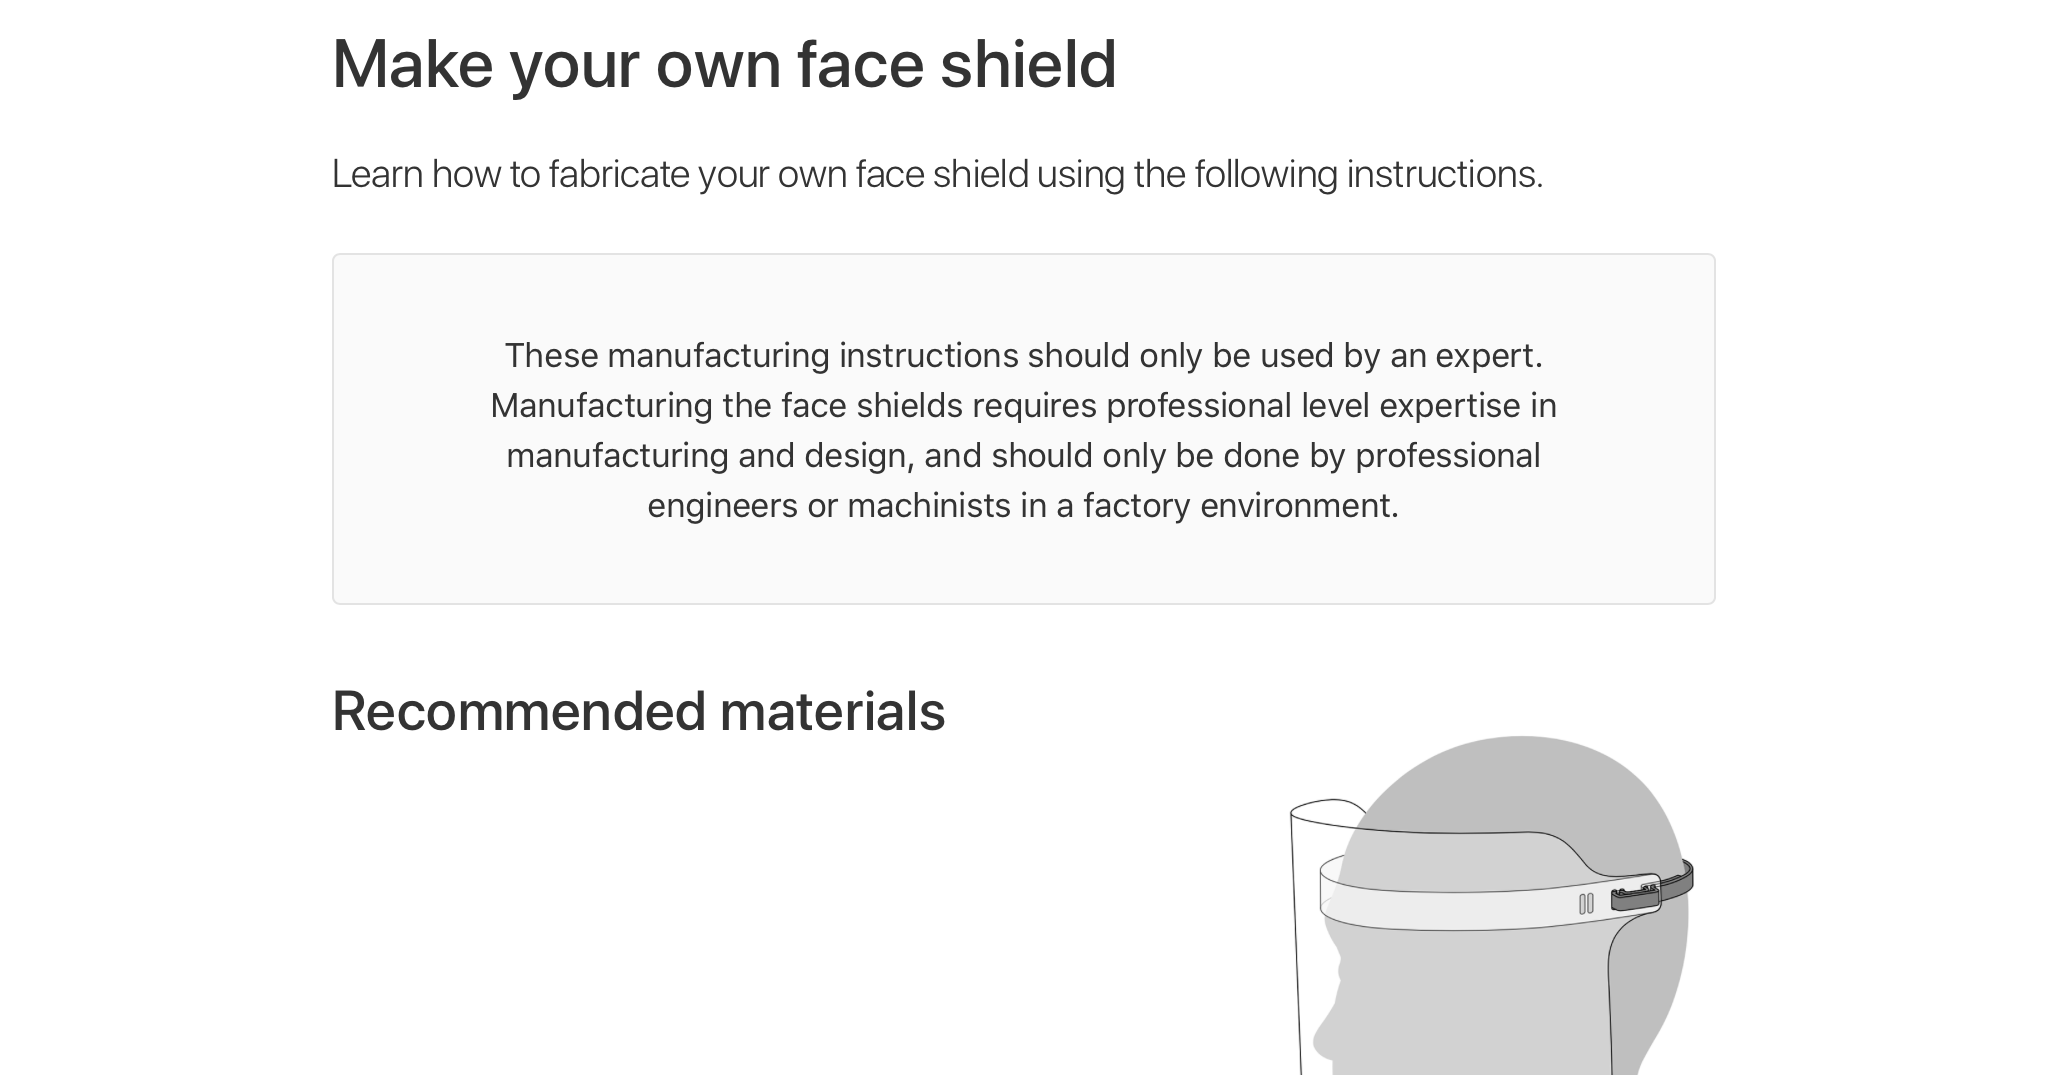 alt="Apple's Face Shield"